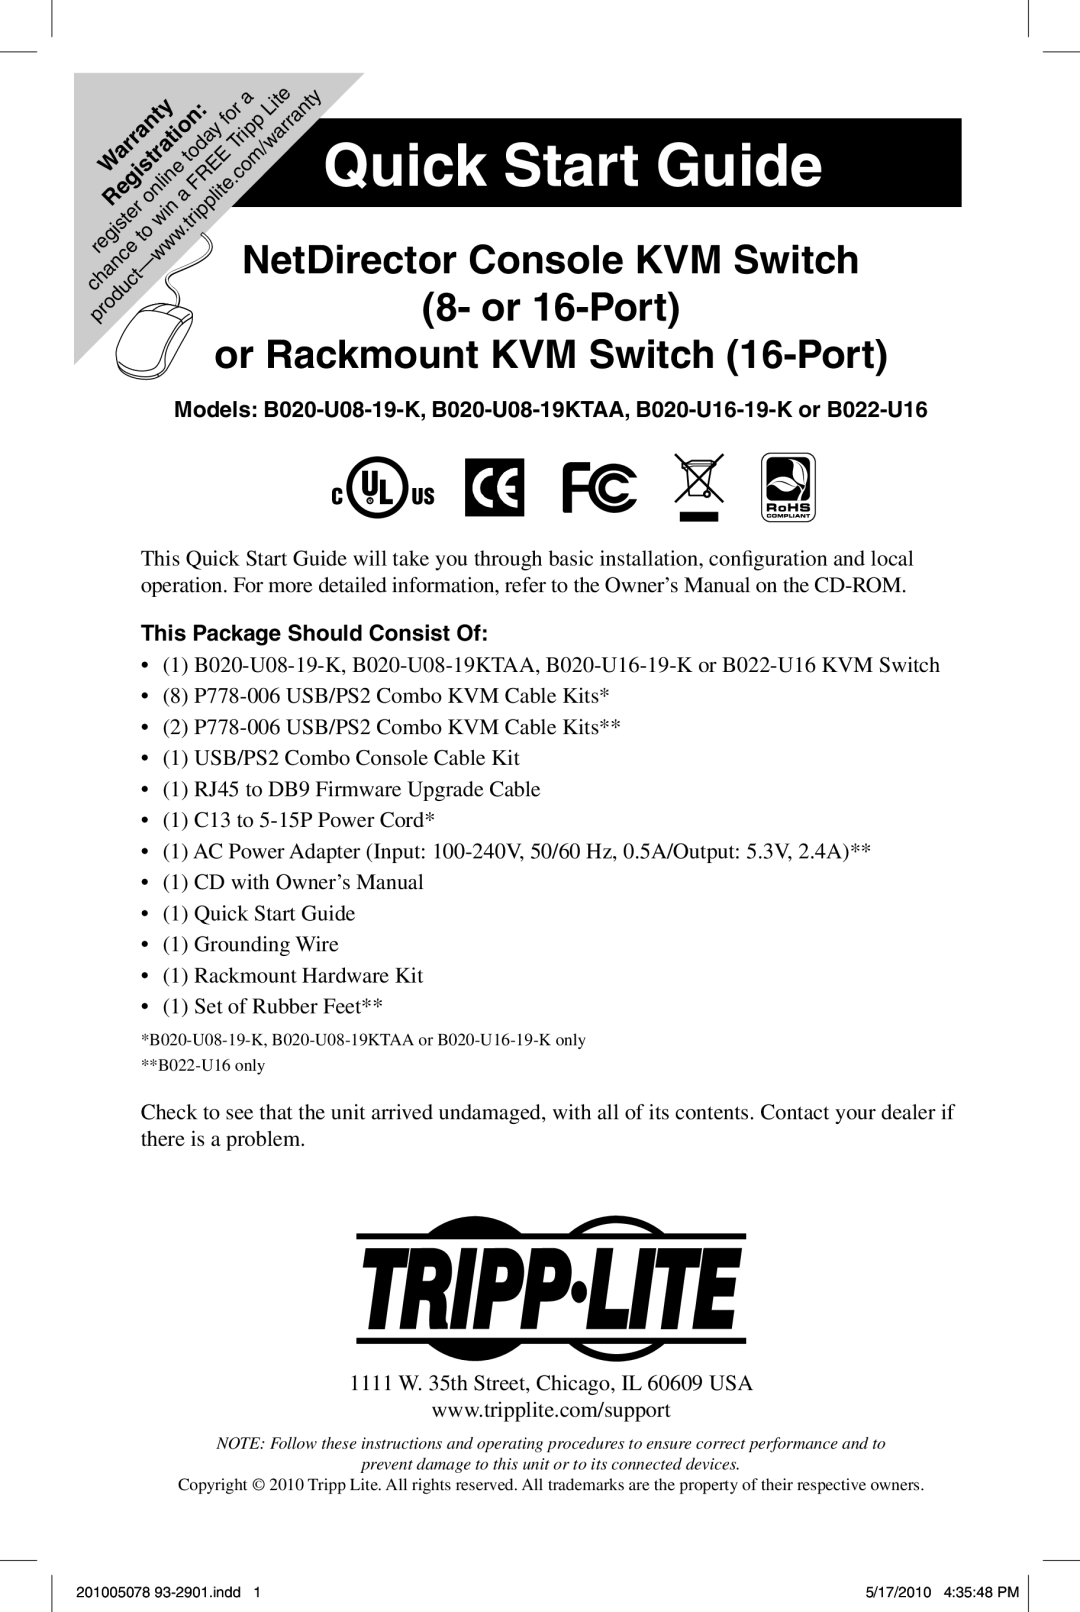 Tripp Lite B022-U16KVM, B020-U08-19KTAA quick start or Rackmount KVM Switch 16-Port, This Package Should Consist Of 